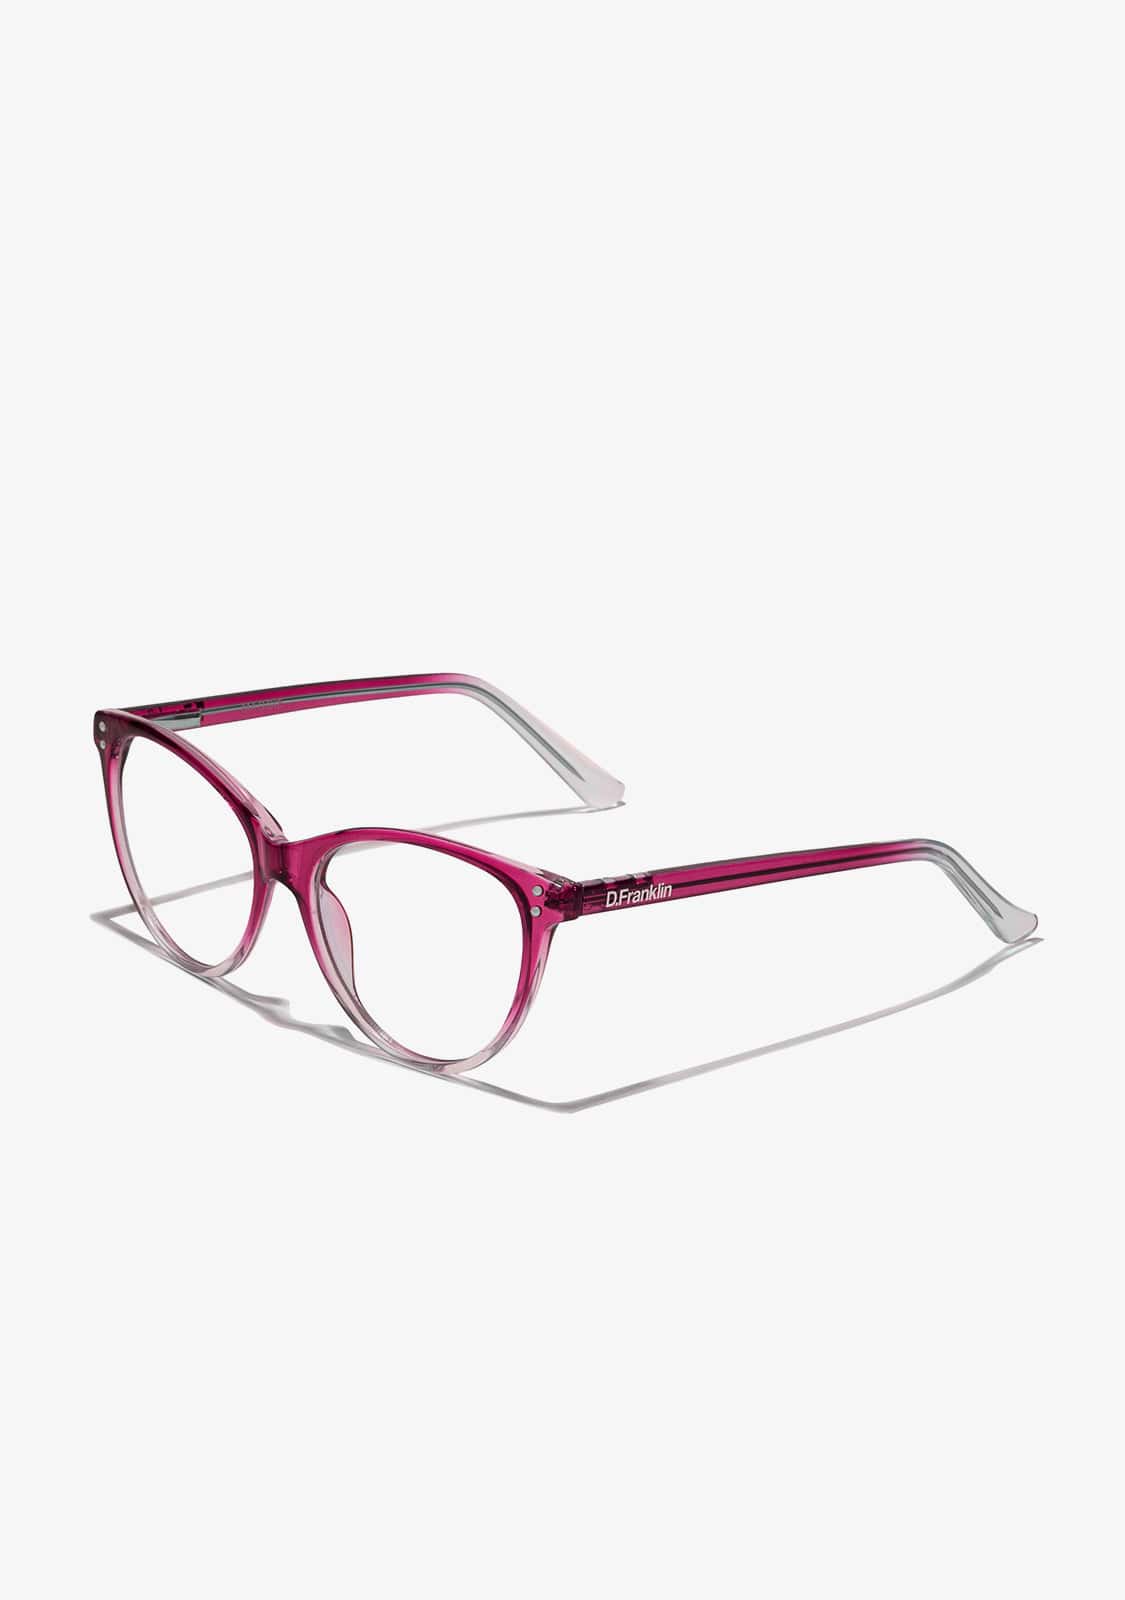 Pack gafas de lectura 2x1 Coronation azul-rosa